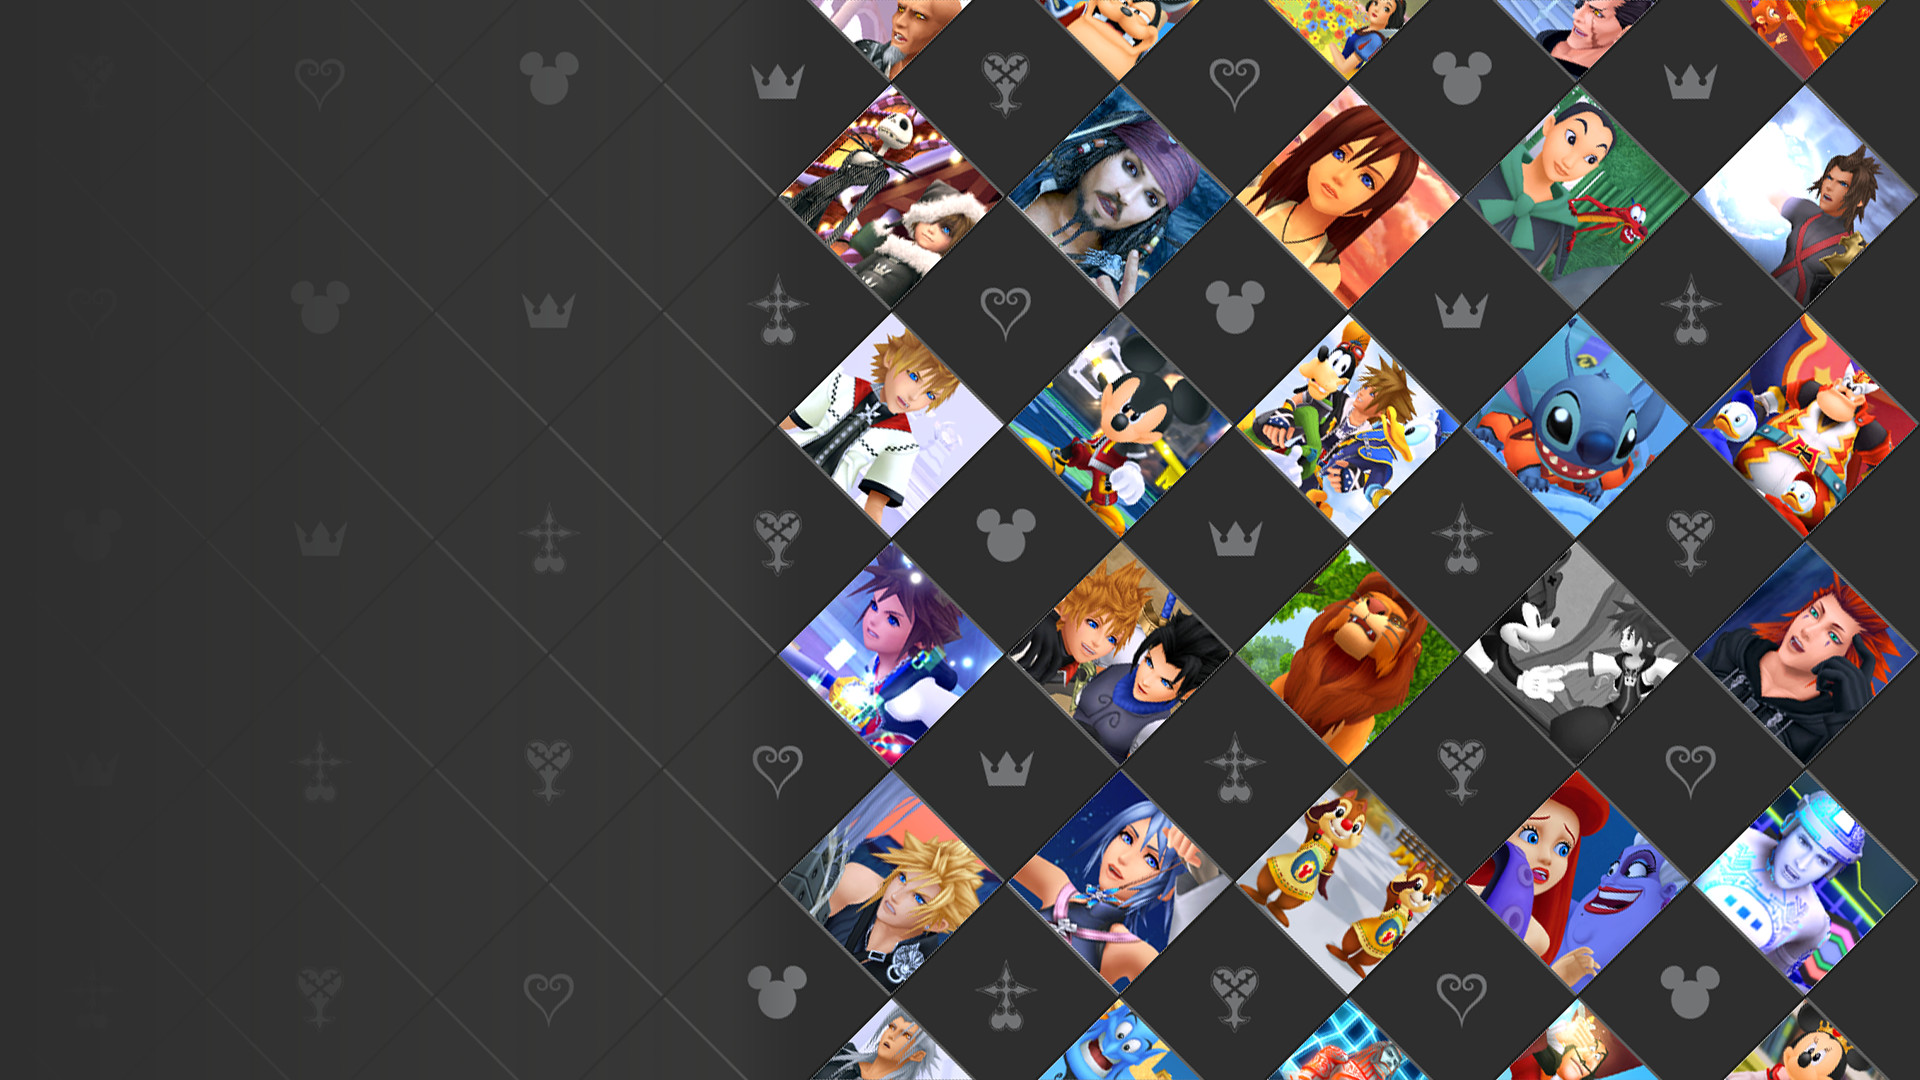 1920x1080 Explore Kingdom Hearts Wallpaper and more!